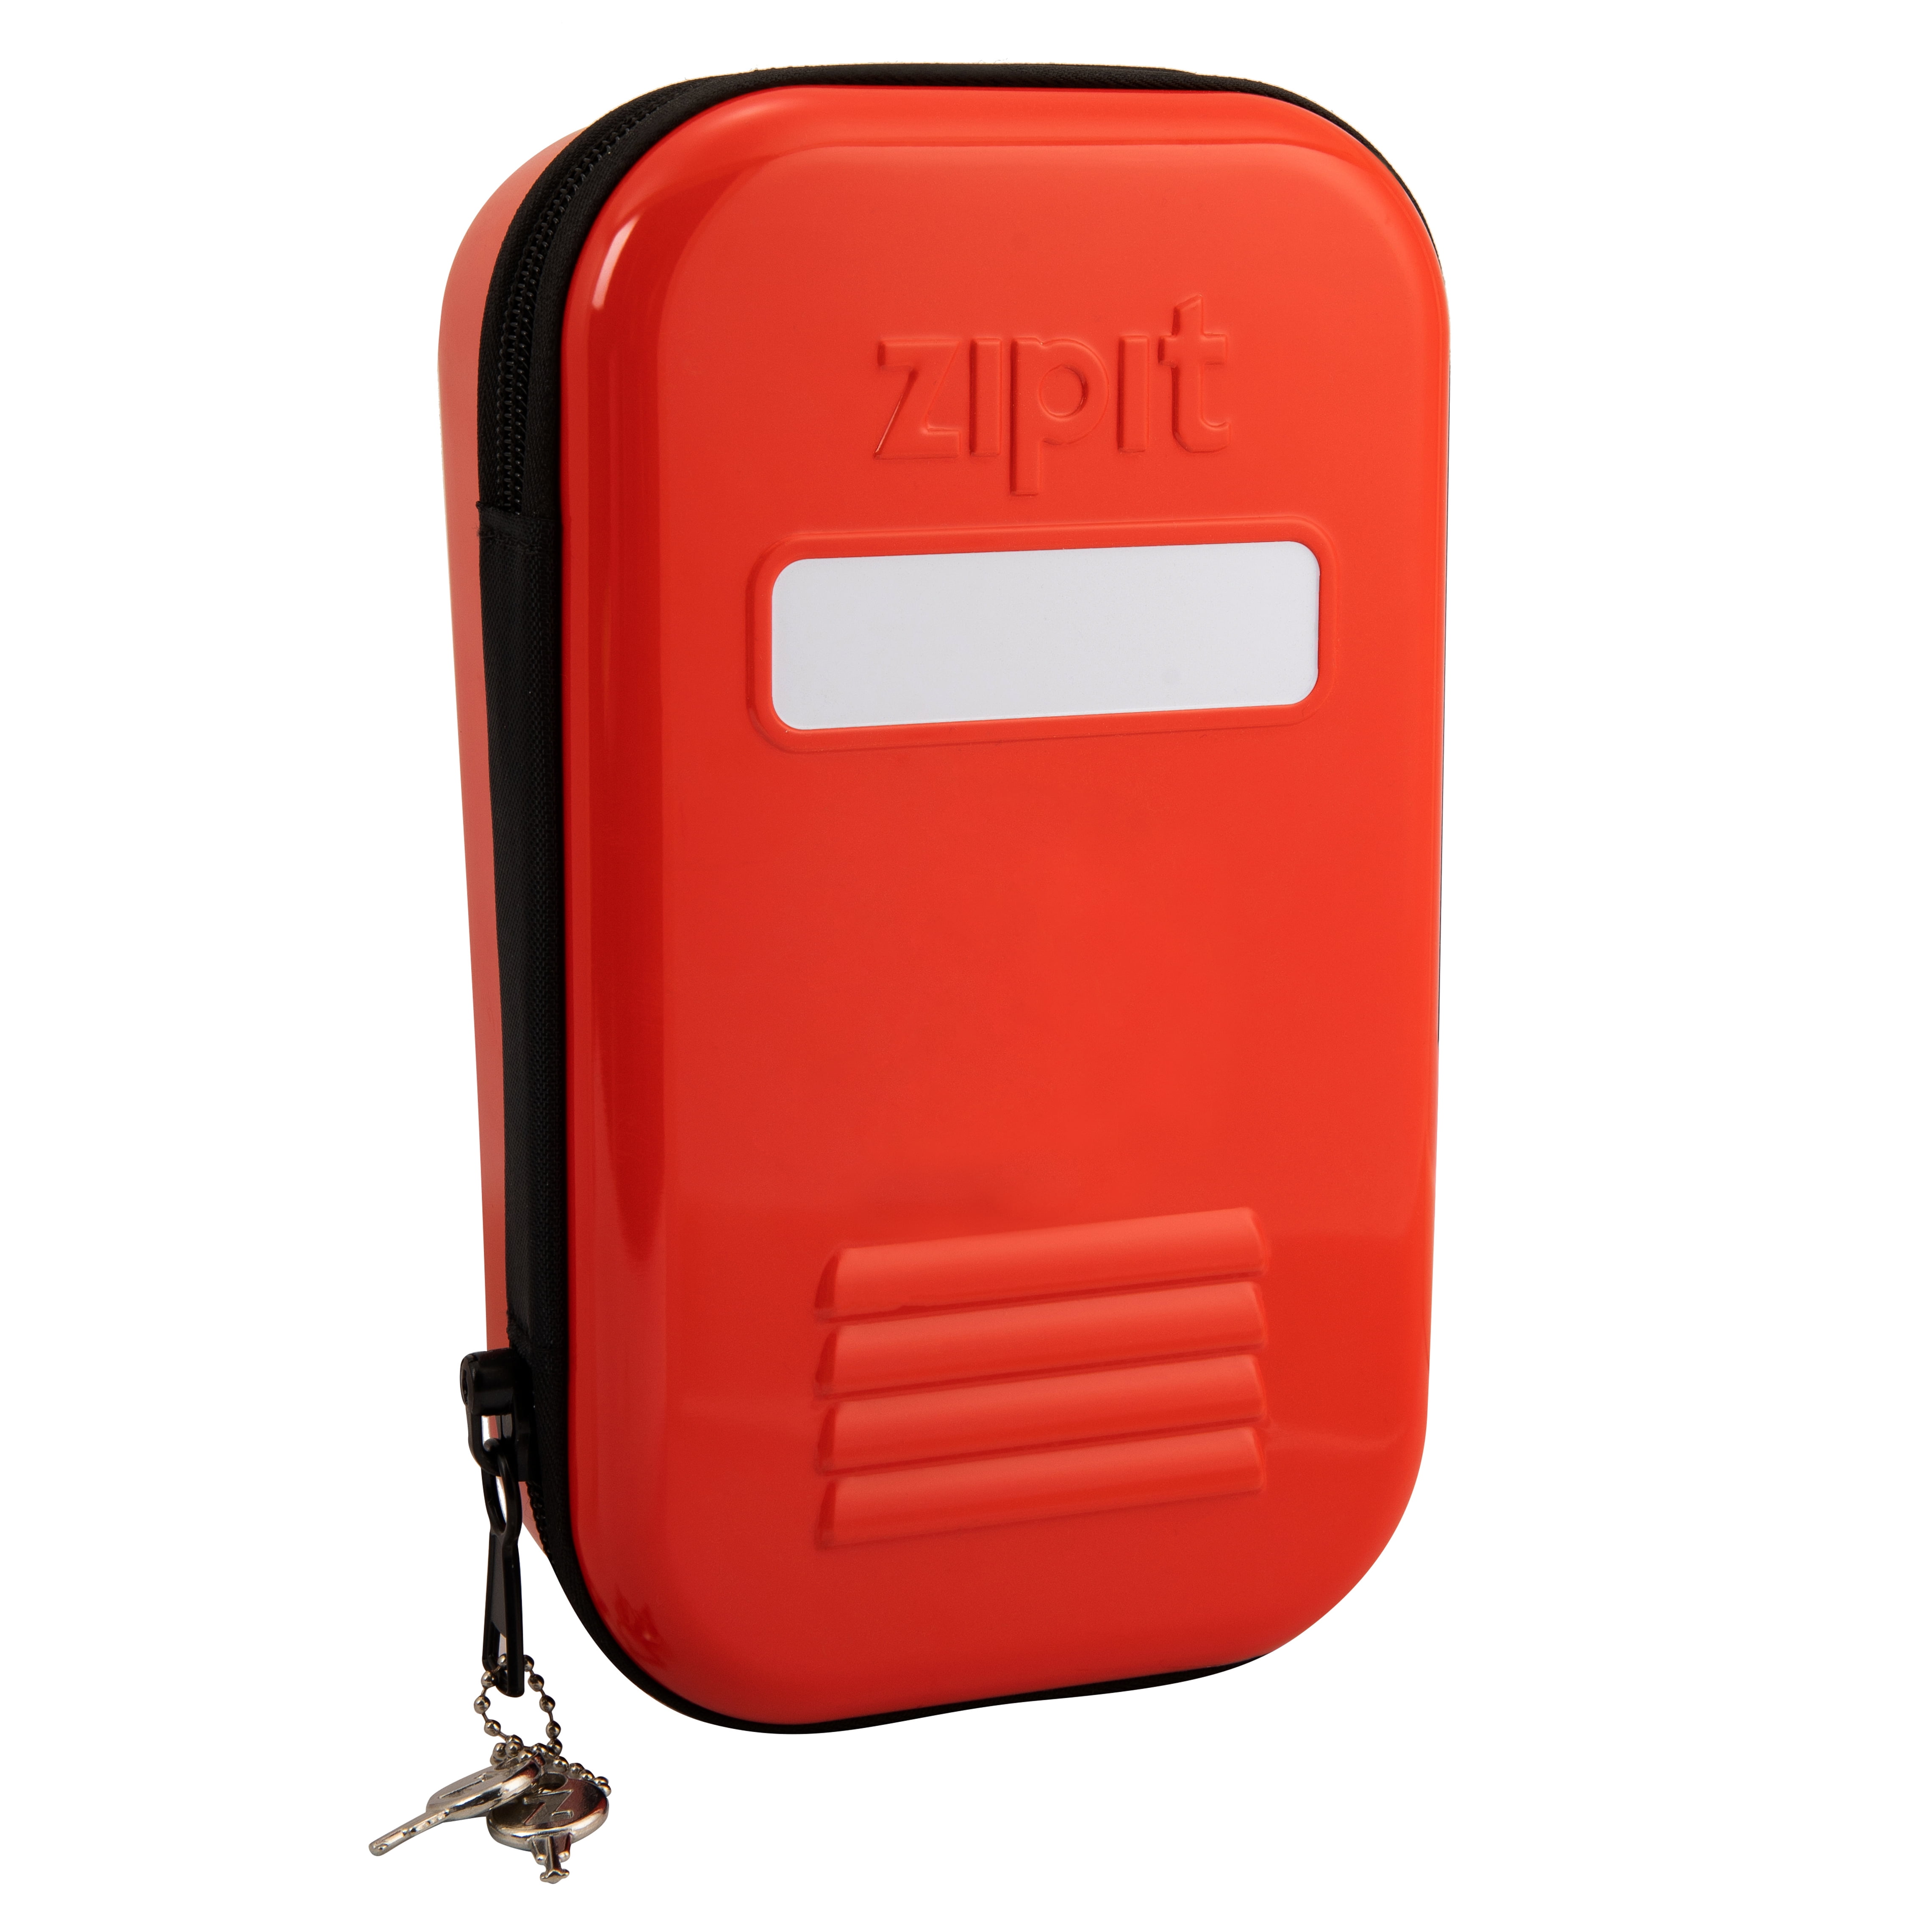 Case•It The Clear Case XL, Large PVC Transparent Zipper Pencil Case, Travel  Carry Case, Red, For All Education Levels, PLP-18-CLR 